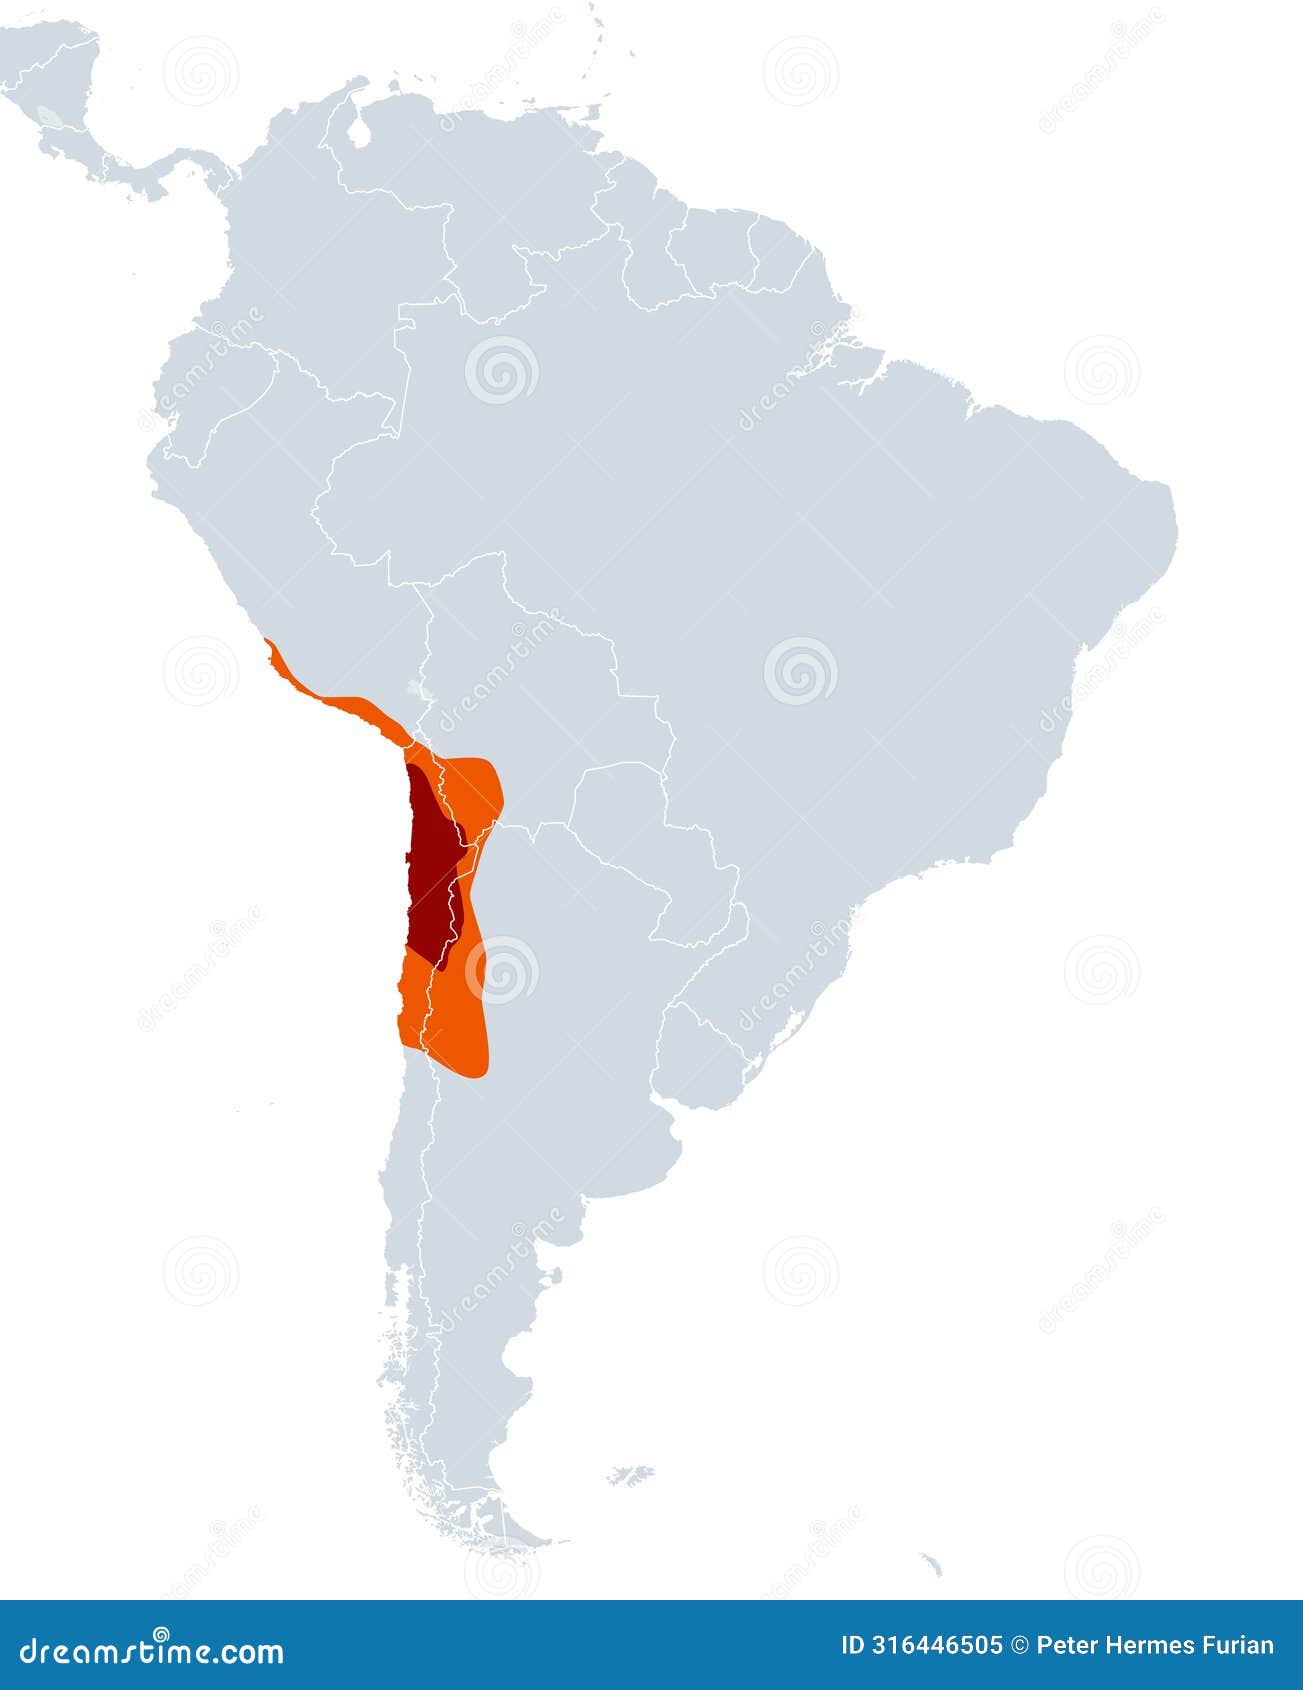 atacama desert, hyperarid plateau north of chile, political map